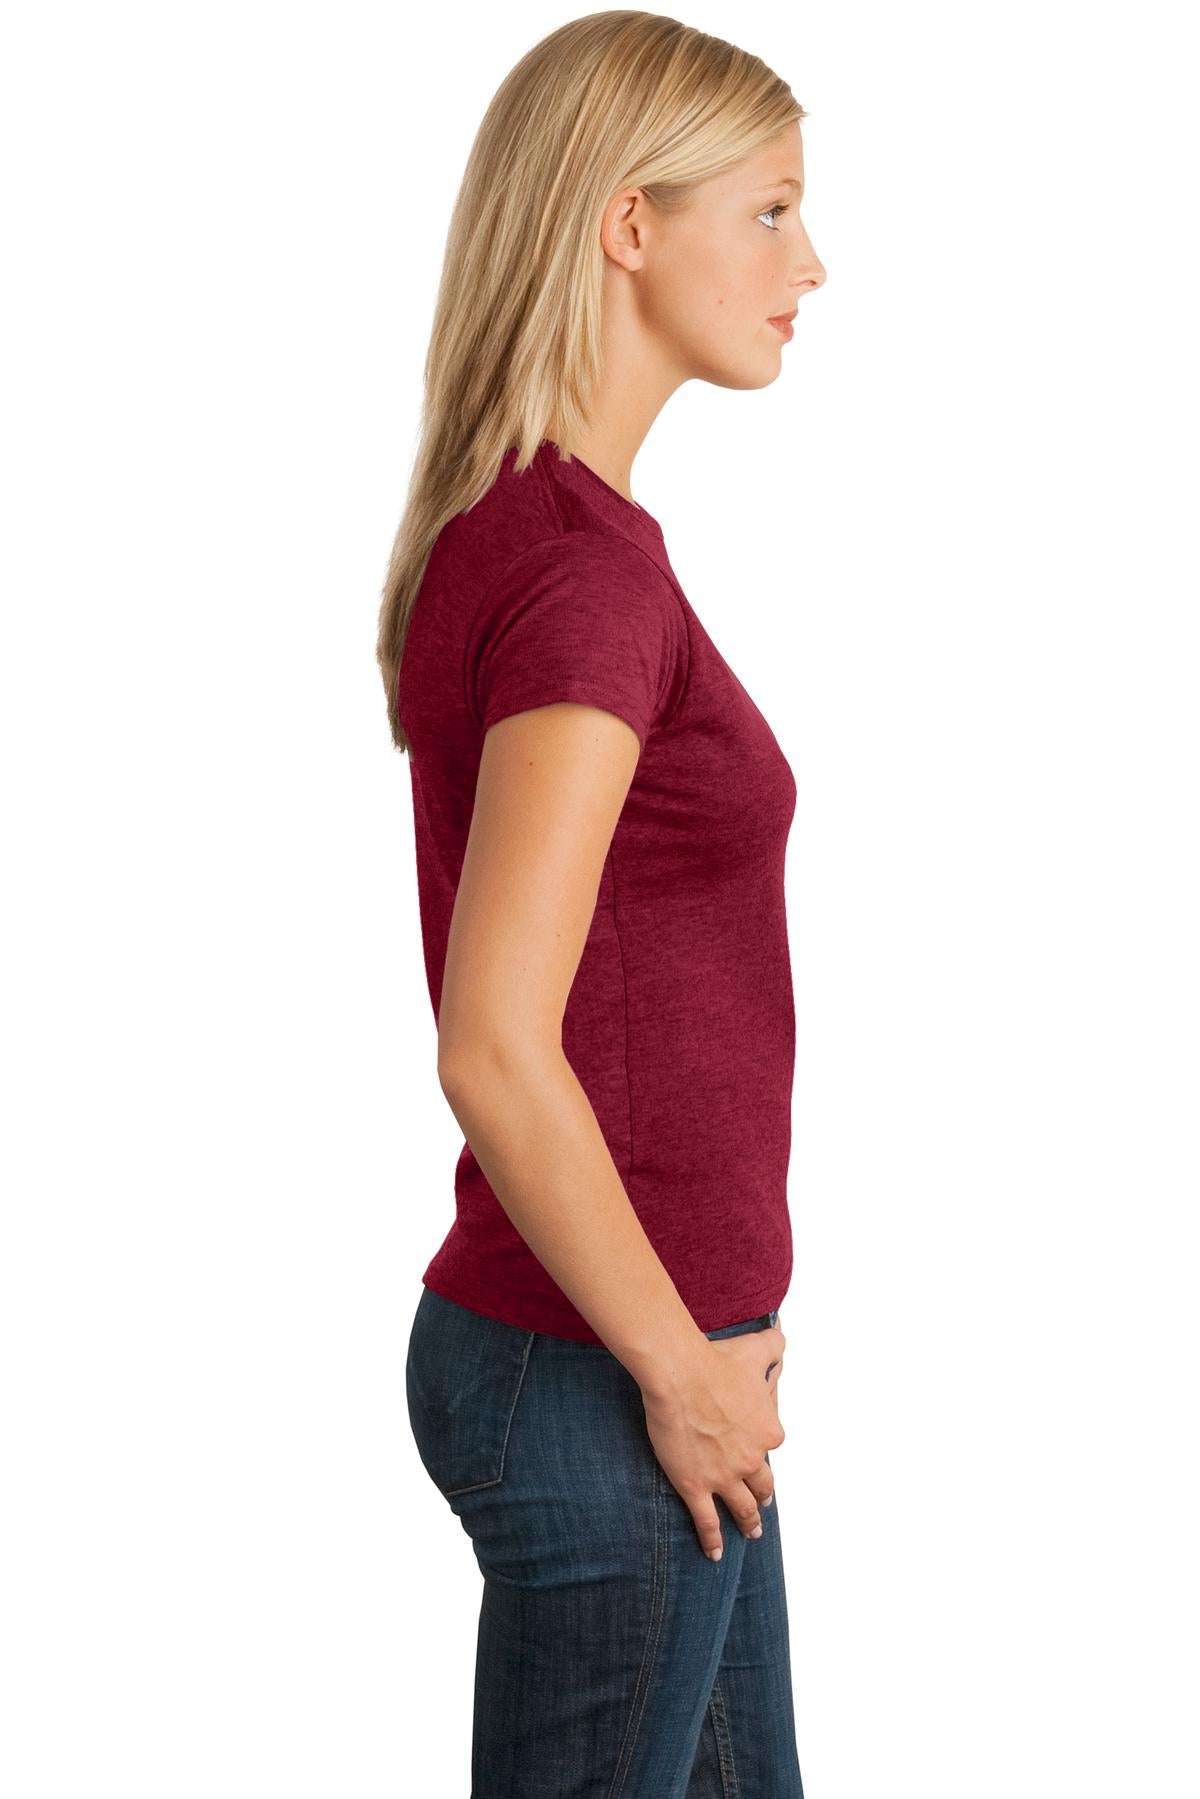 Gildan Softstyle® Ladies T-Shirt. 64000L - DFW Impression